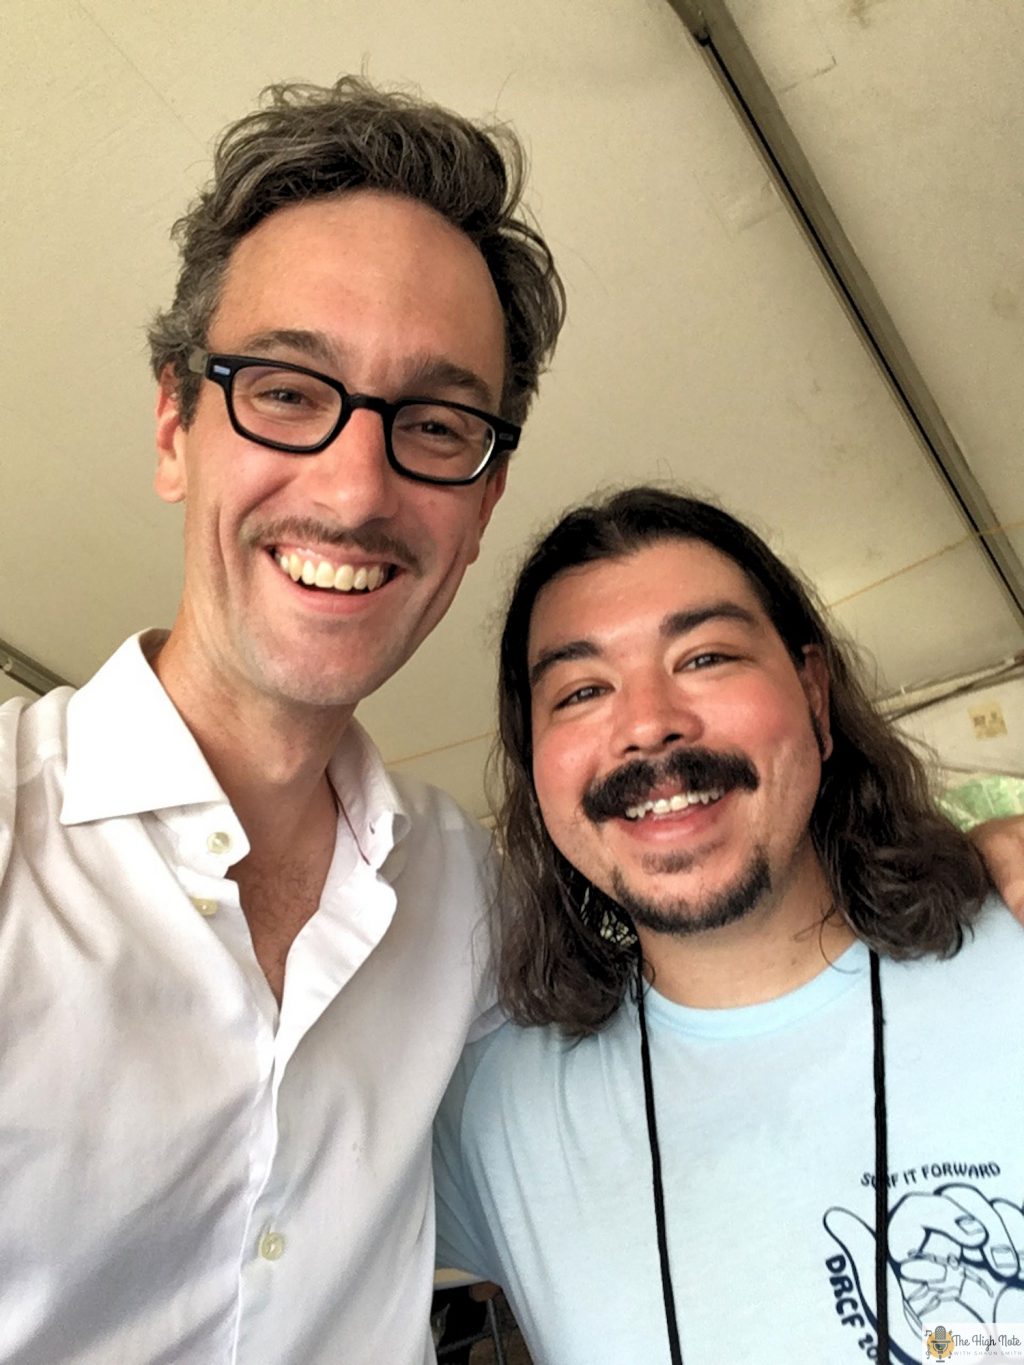 David Myles and Shaun Smith at the 57th annual Philadelphia Folk Festival